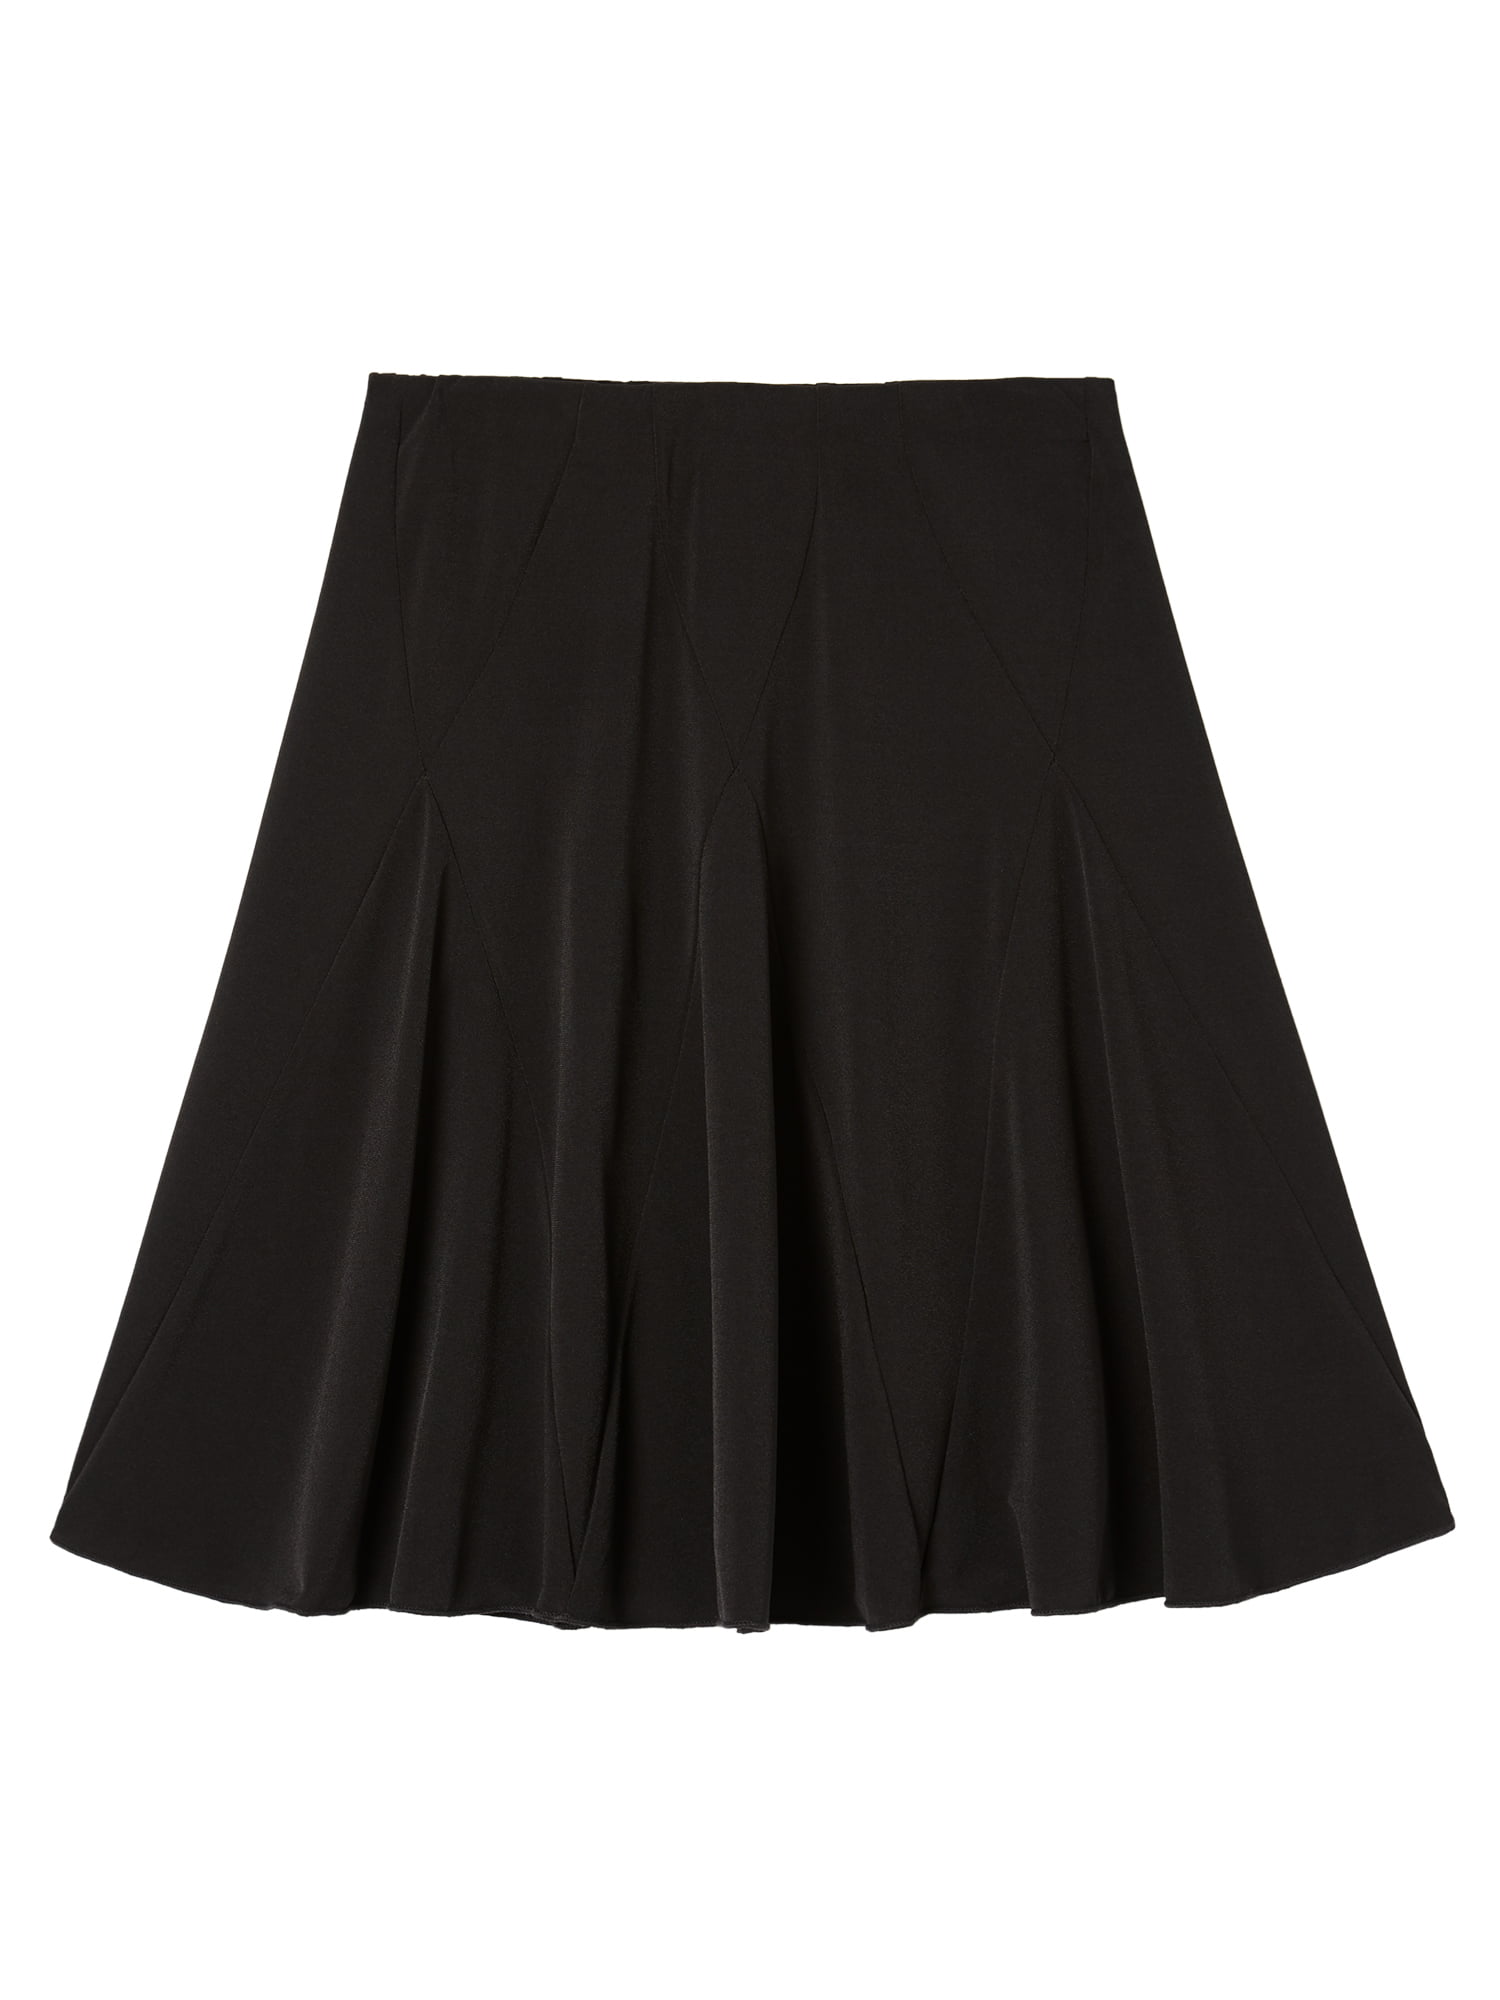 Essential Aline Skirt (Big Girls) - Walmart.com